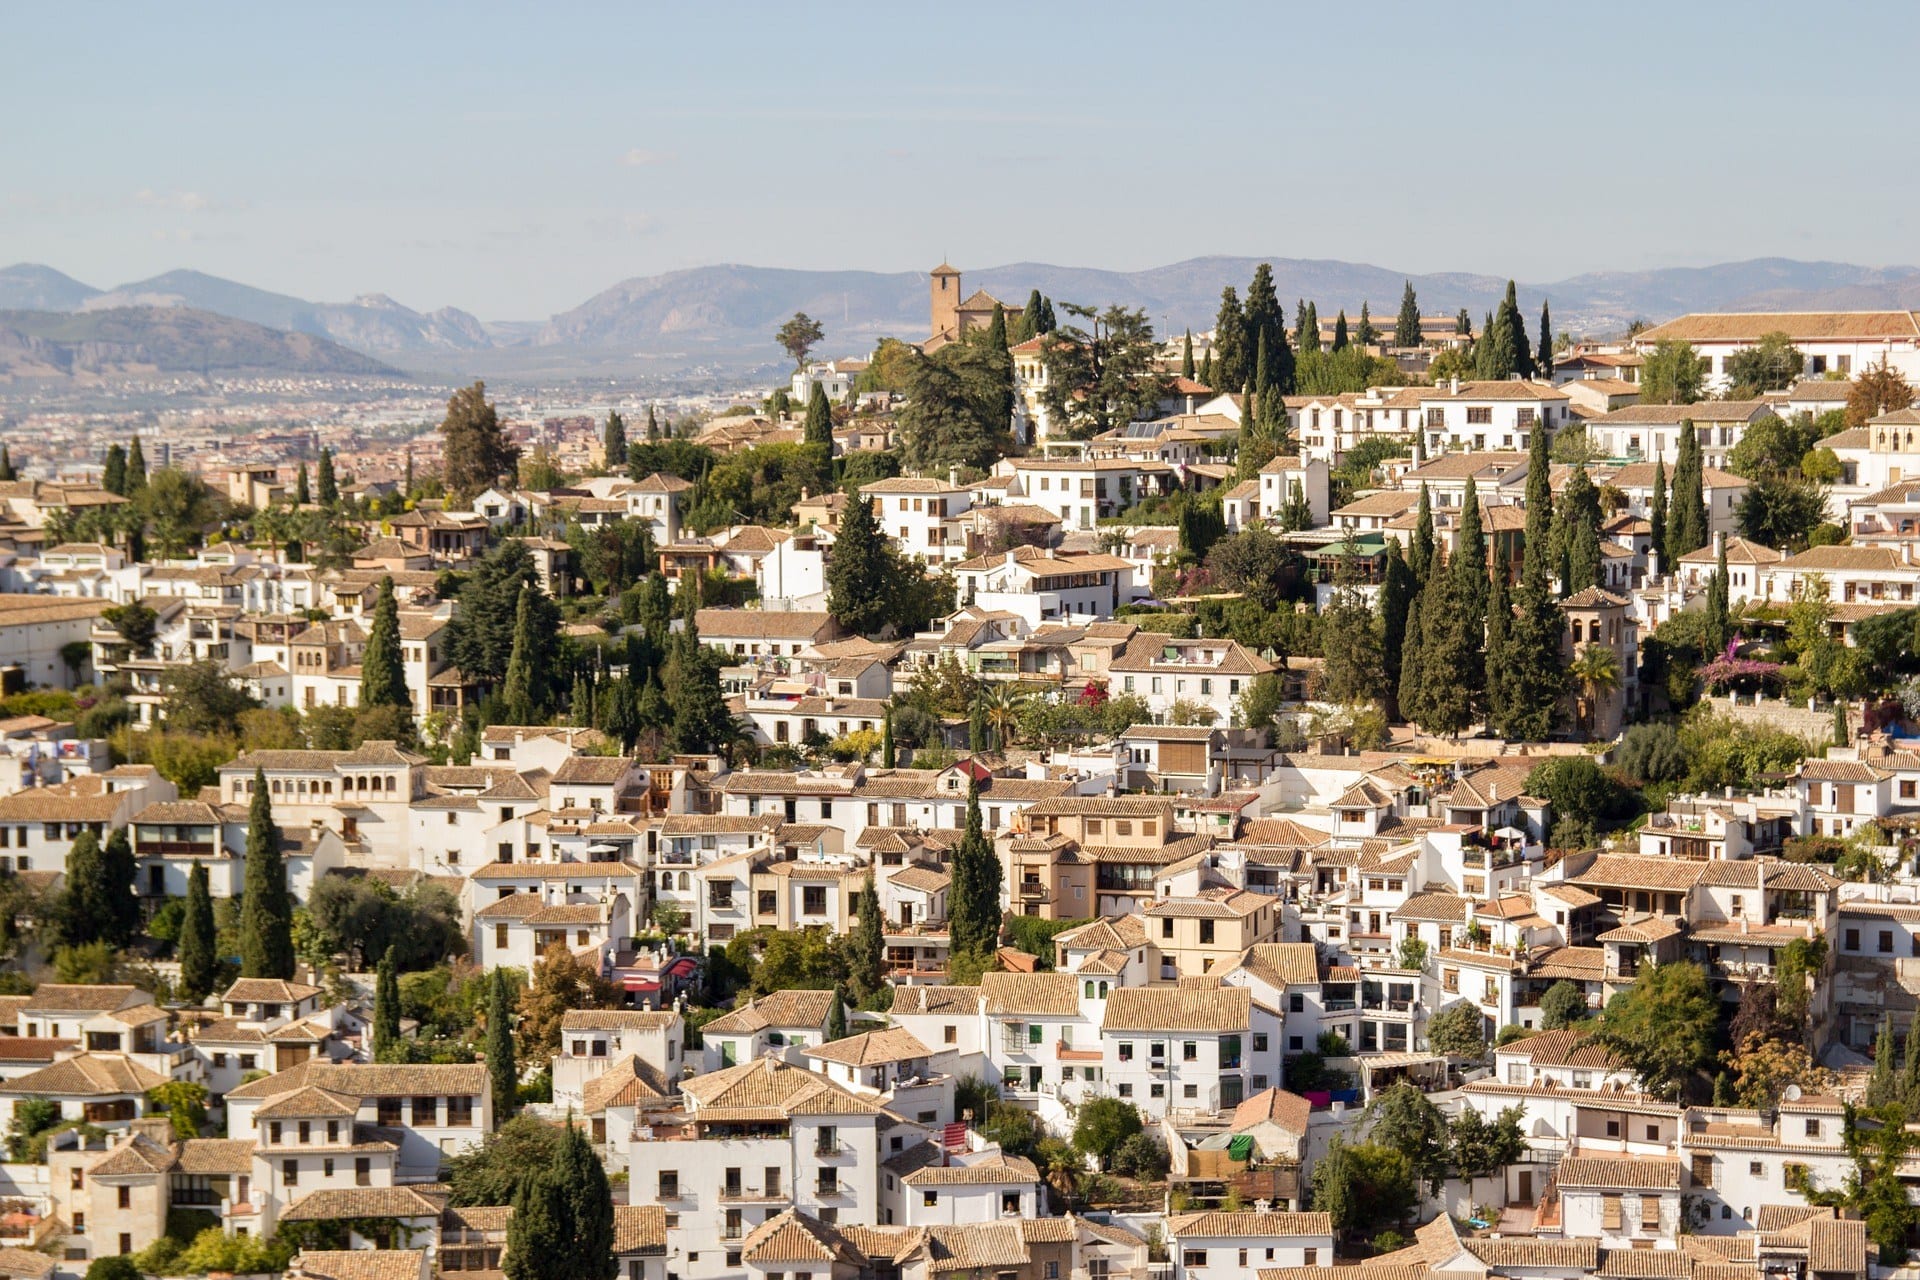 Granada must close all bars, restaurants and non-essential businesses